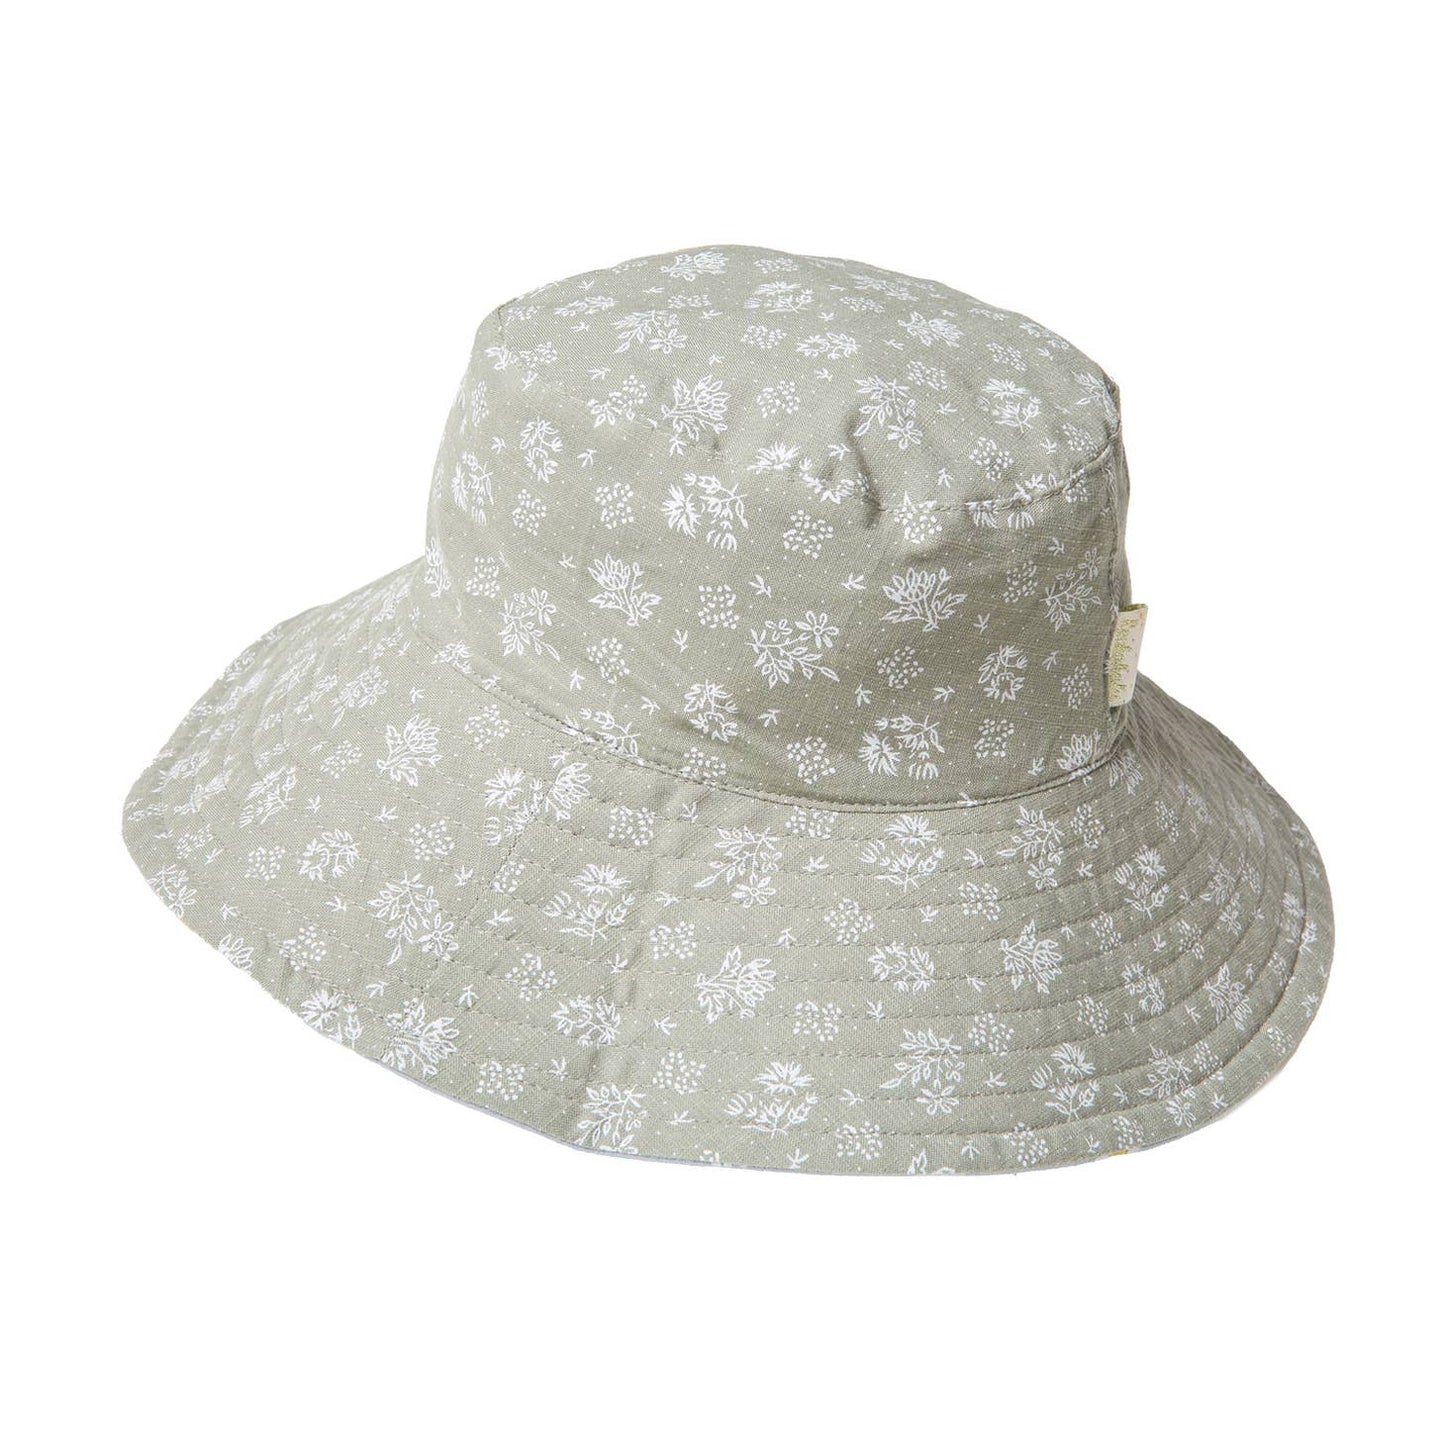 Rockahula reversible sun hat